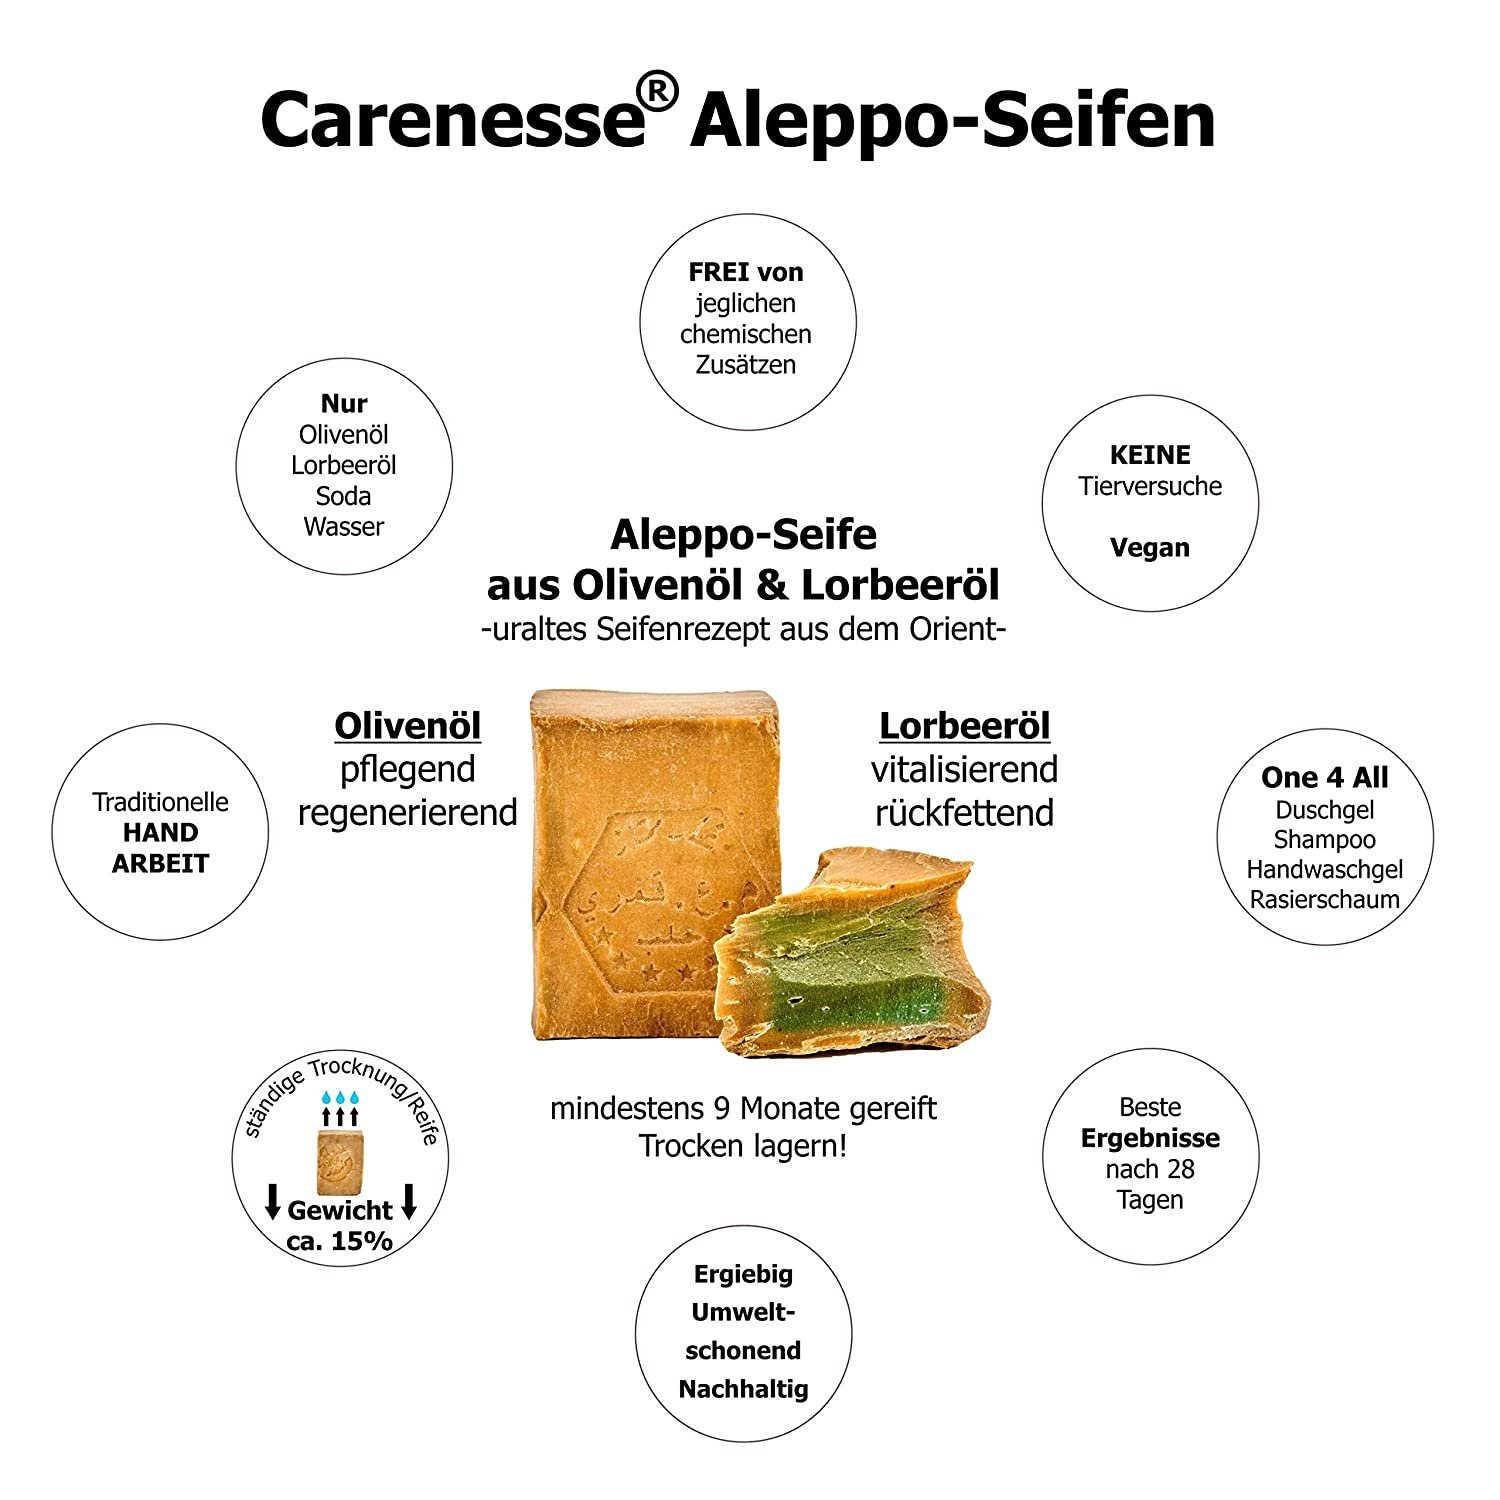 Alepposeife Olivenöl, 55% & Original Handseife Olivenölseife, Lorbeeröl Seife Aleppo Aleppo-Seife Gesichtsseife Carenesse Haarseife 45% Lorbeerölseife